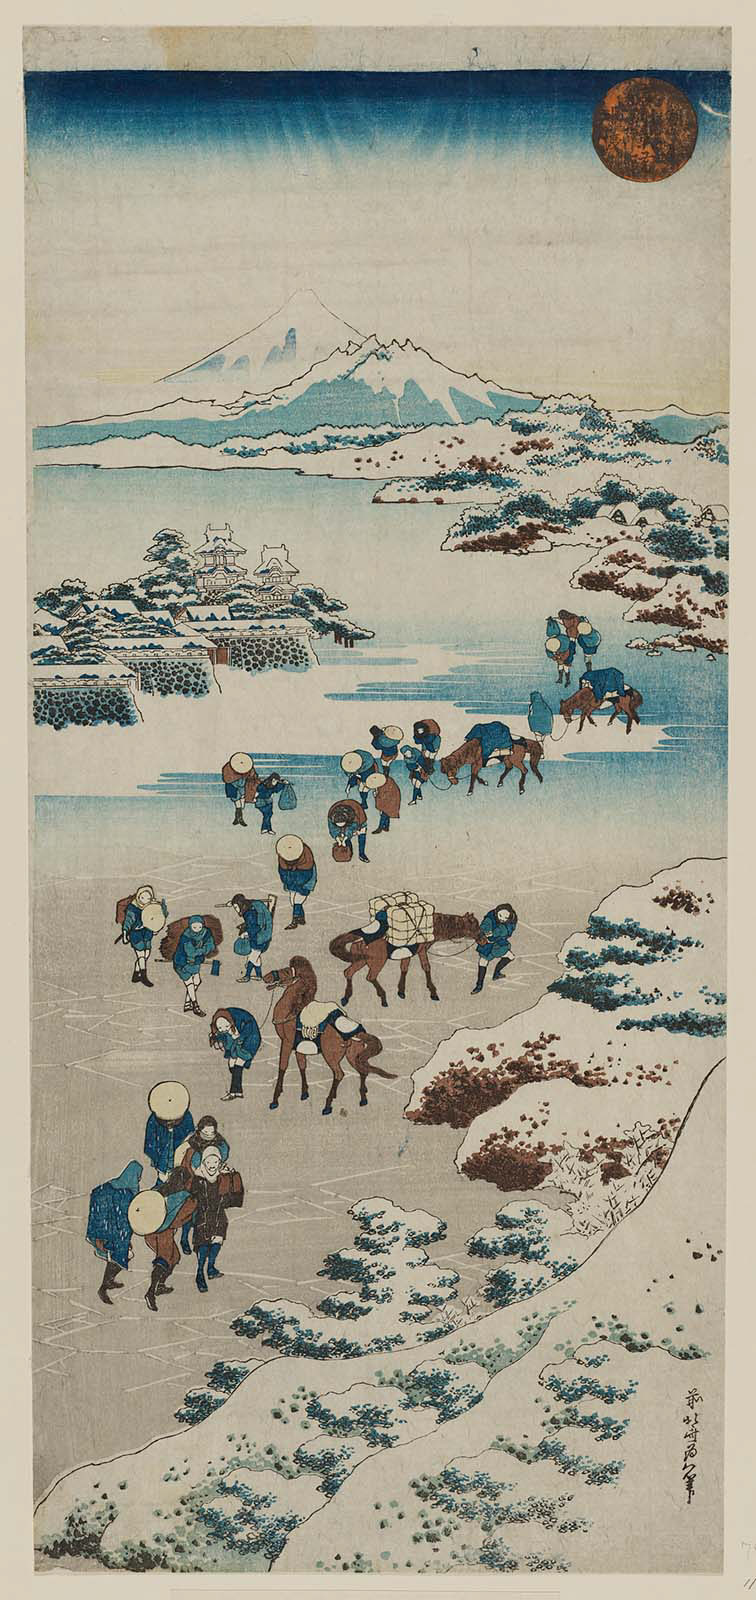 Hokusai - Crossing the Ice on Lake Suwa in Shinano Province - Large Images of Nature